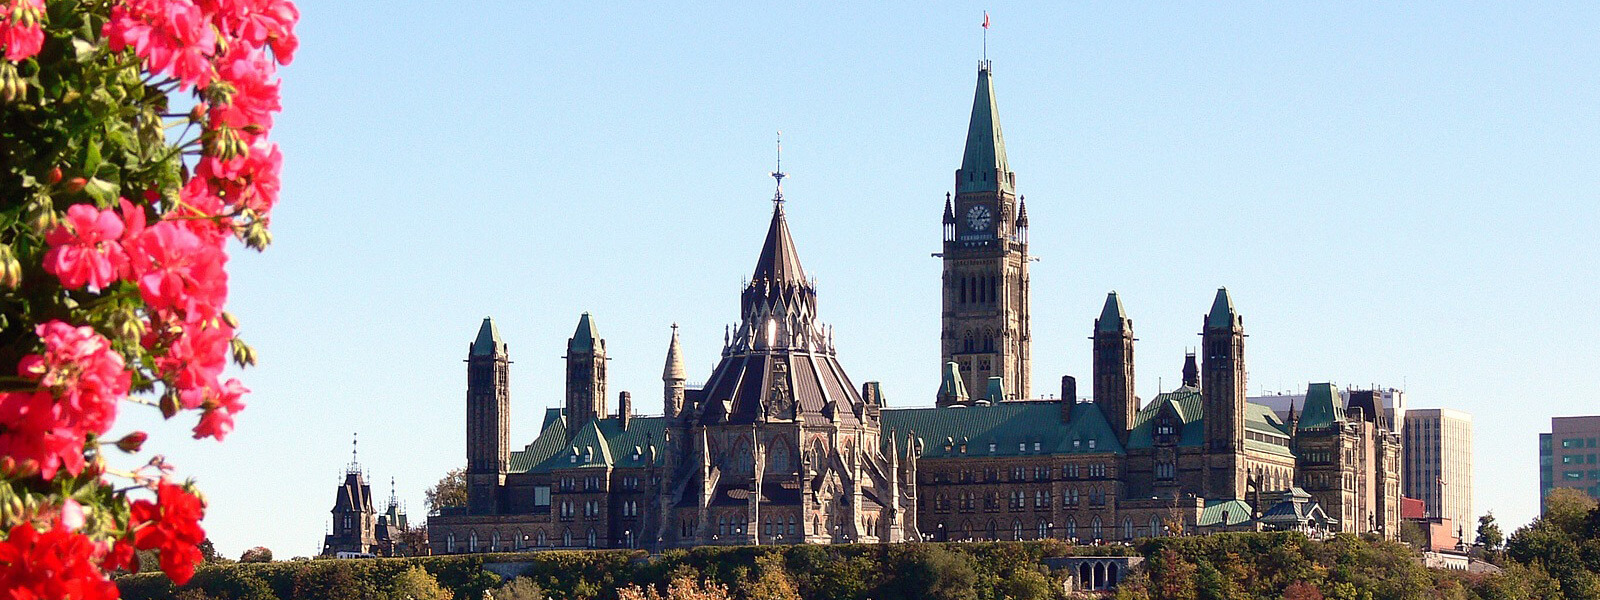 The city of Ottawa, Canada's southeastern capital